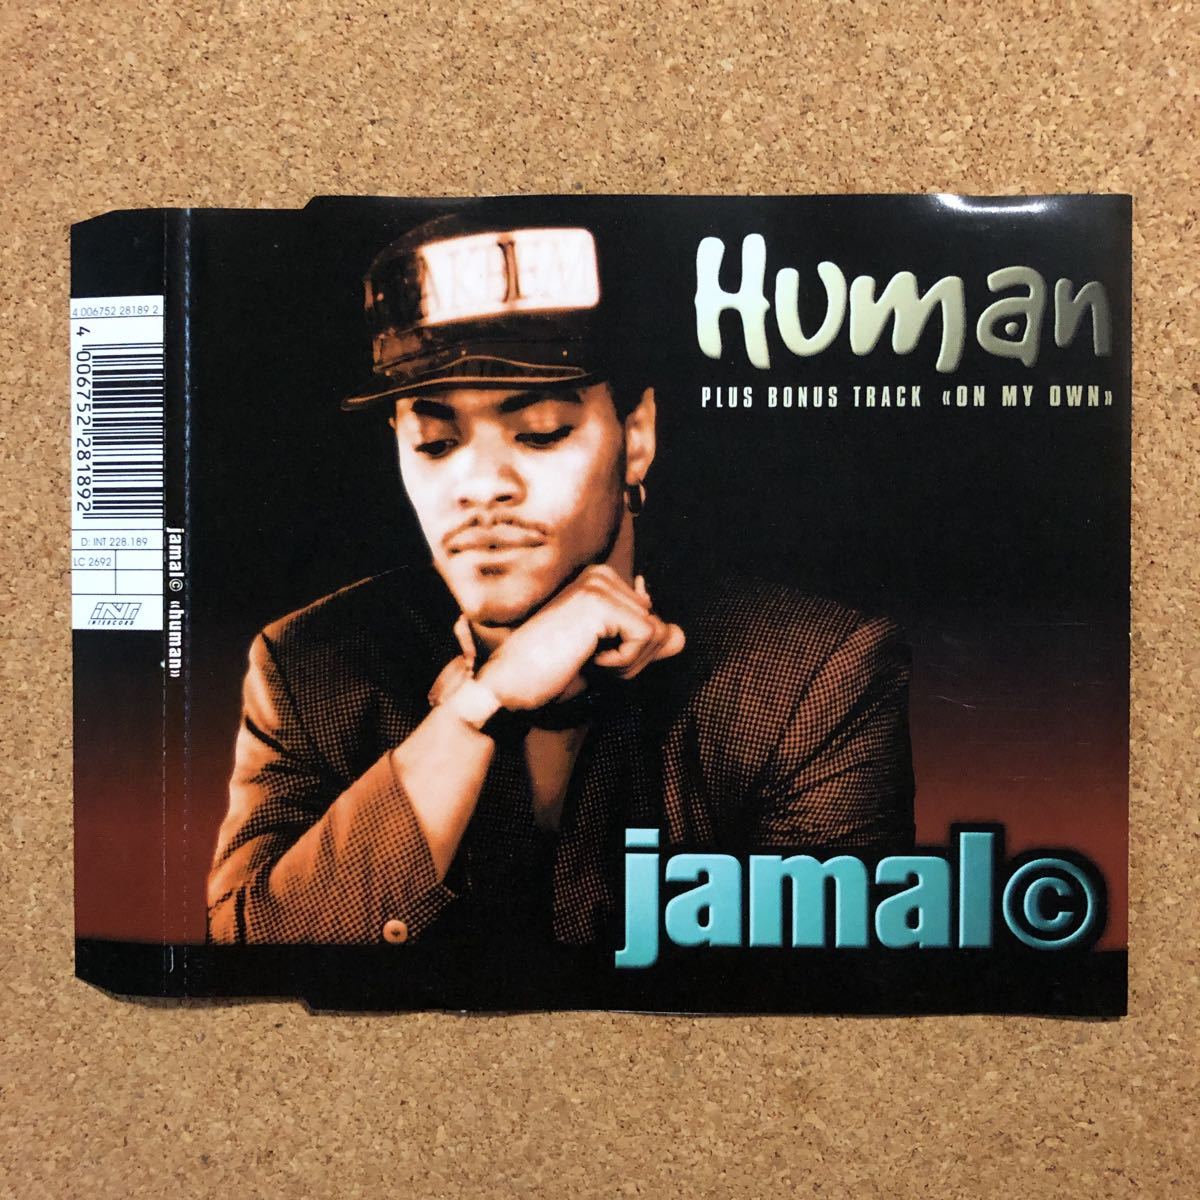 【eu-rap】Jamal C / Human［CDs］《 9595》_画像1